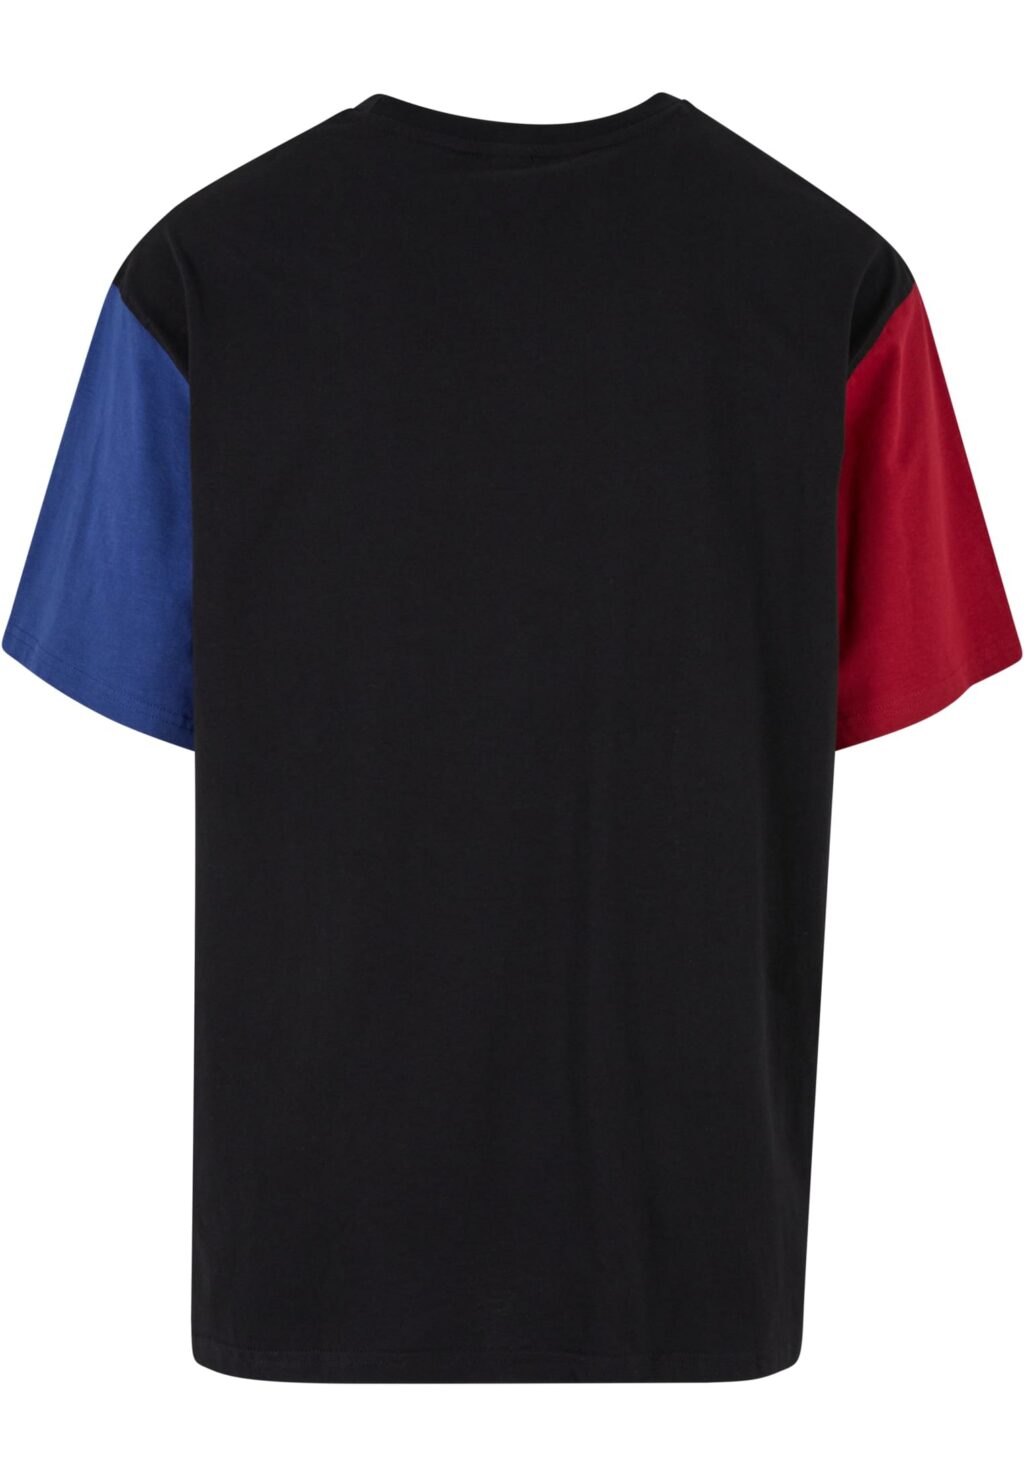 Ecko Unltd. Grande T-Shirt black/red/blue ECKOTS1137